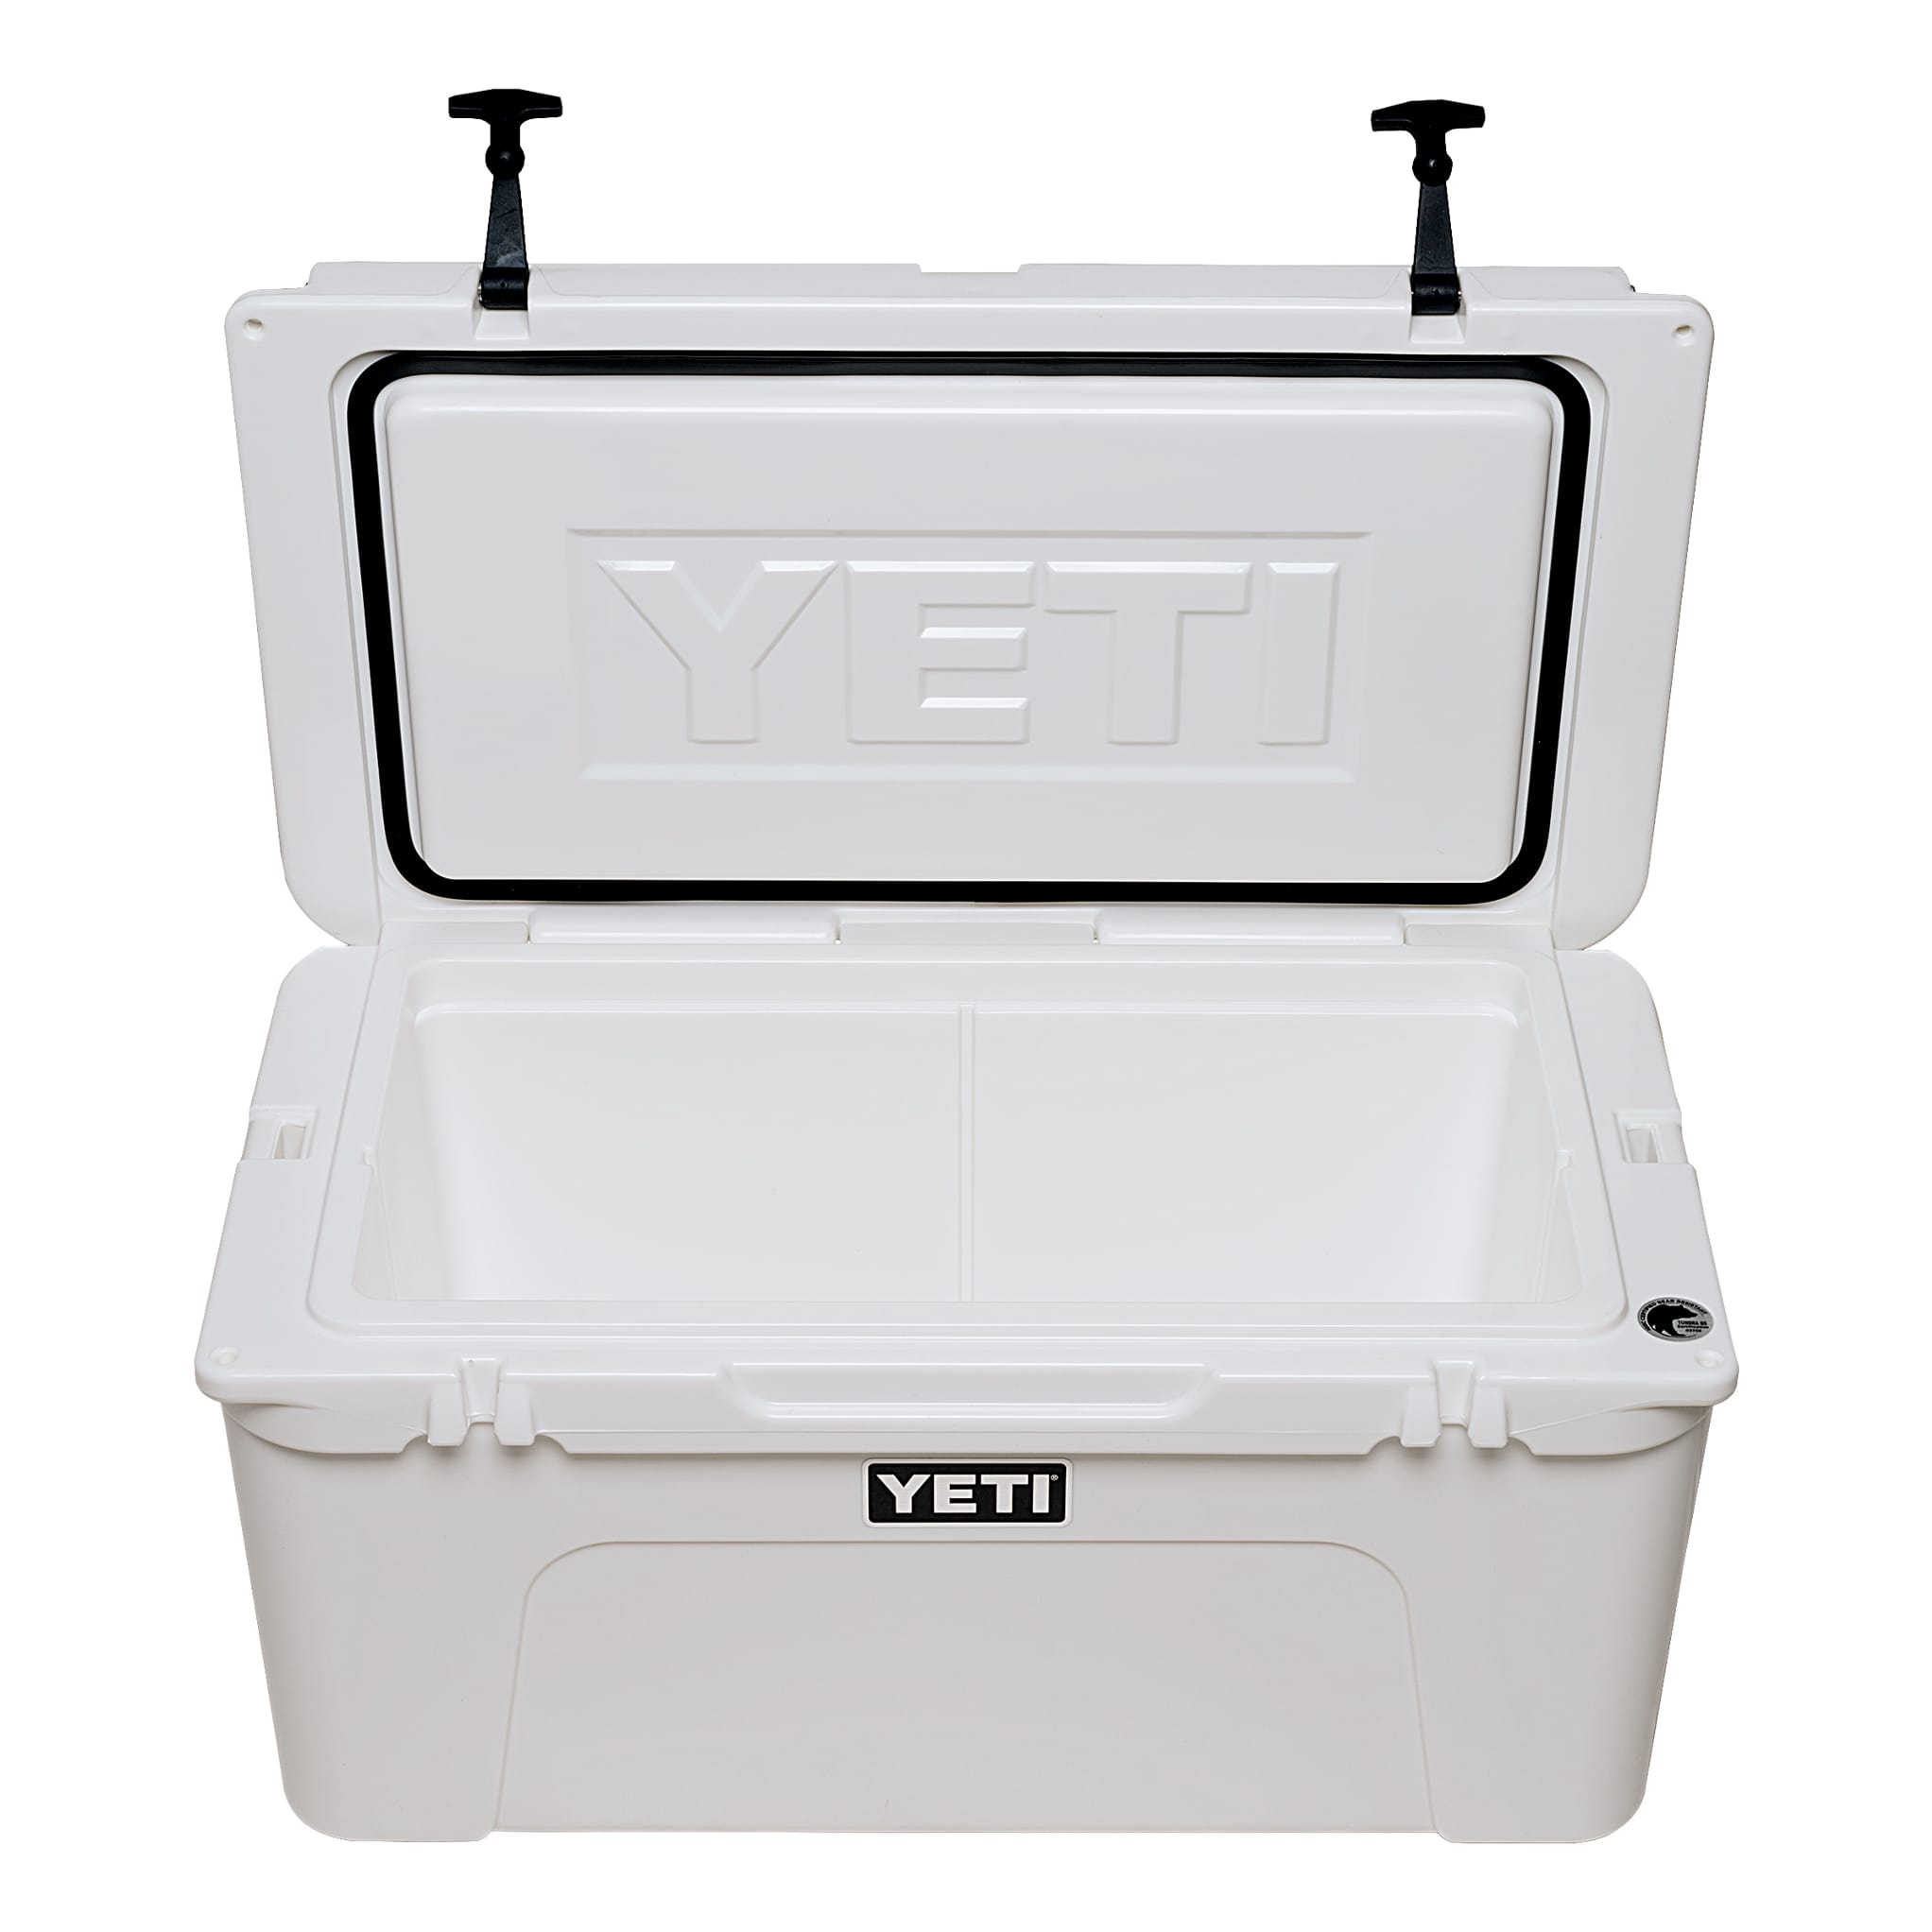 YETI® Tundra 65 Cooler - White - Open View